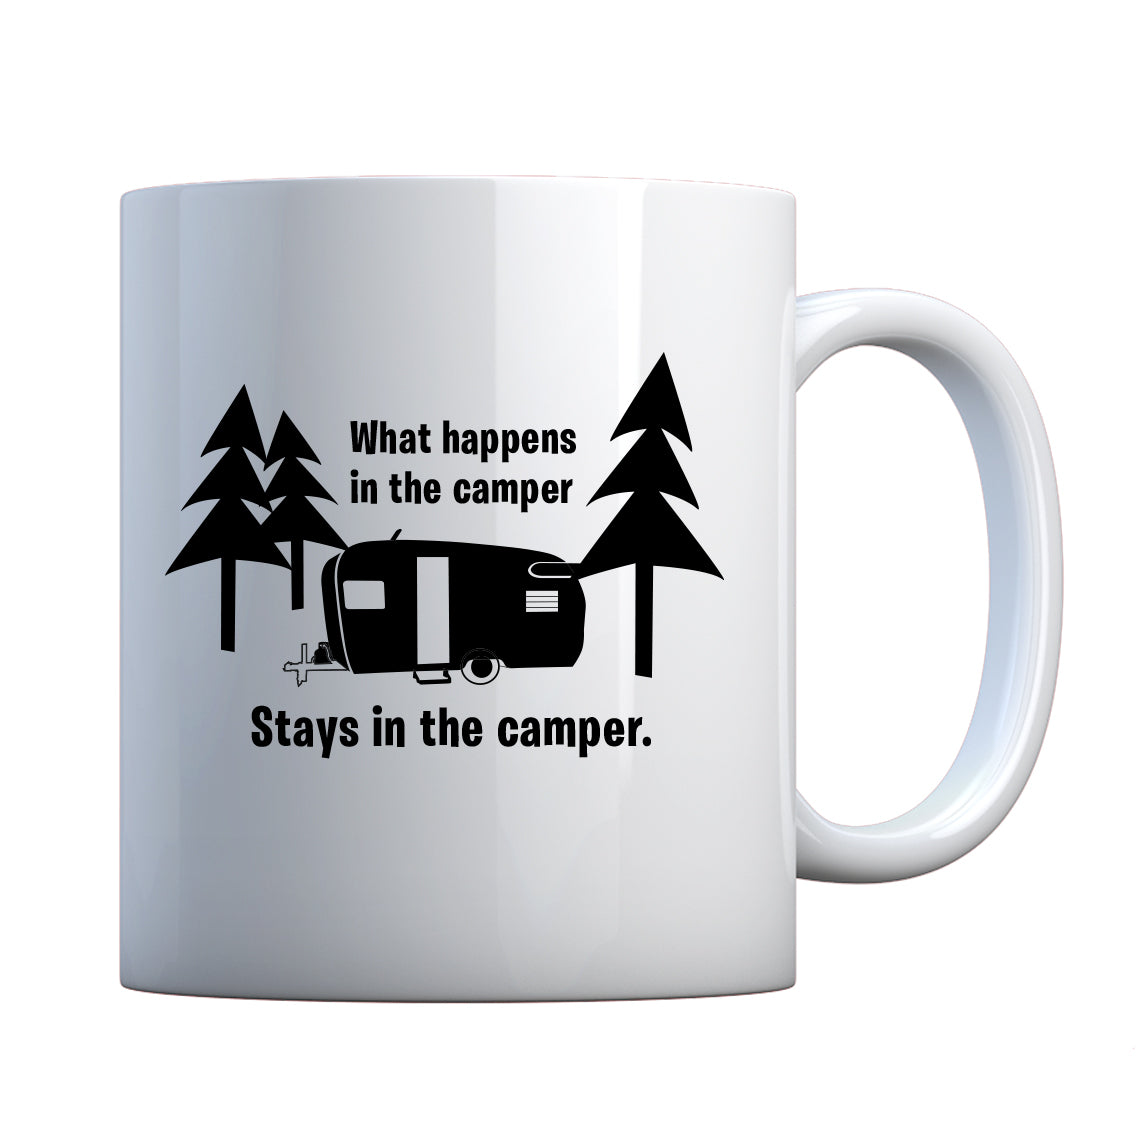 What Happens in the Camper Ceramic Gift Mug